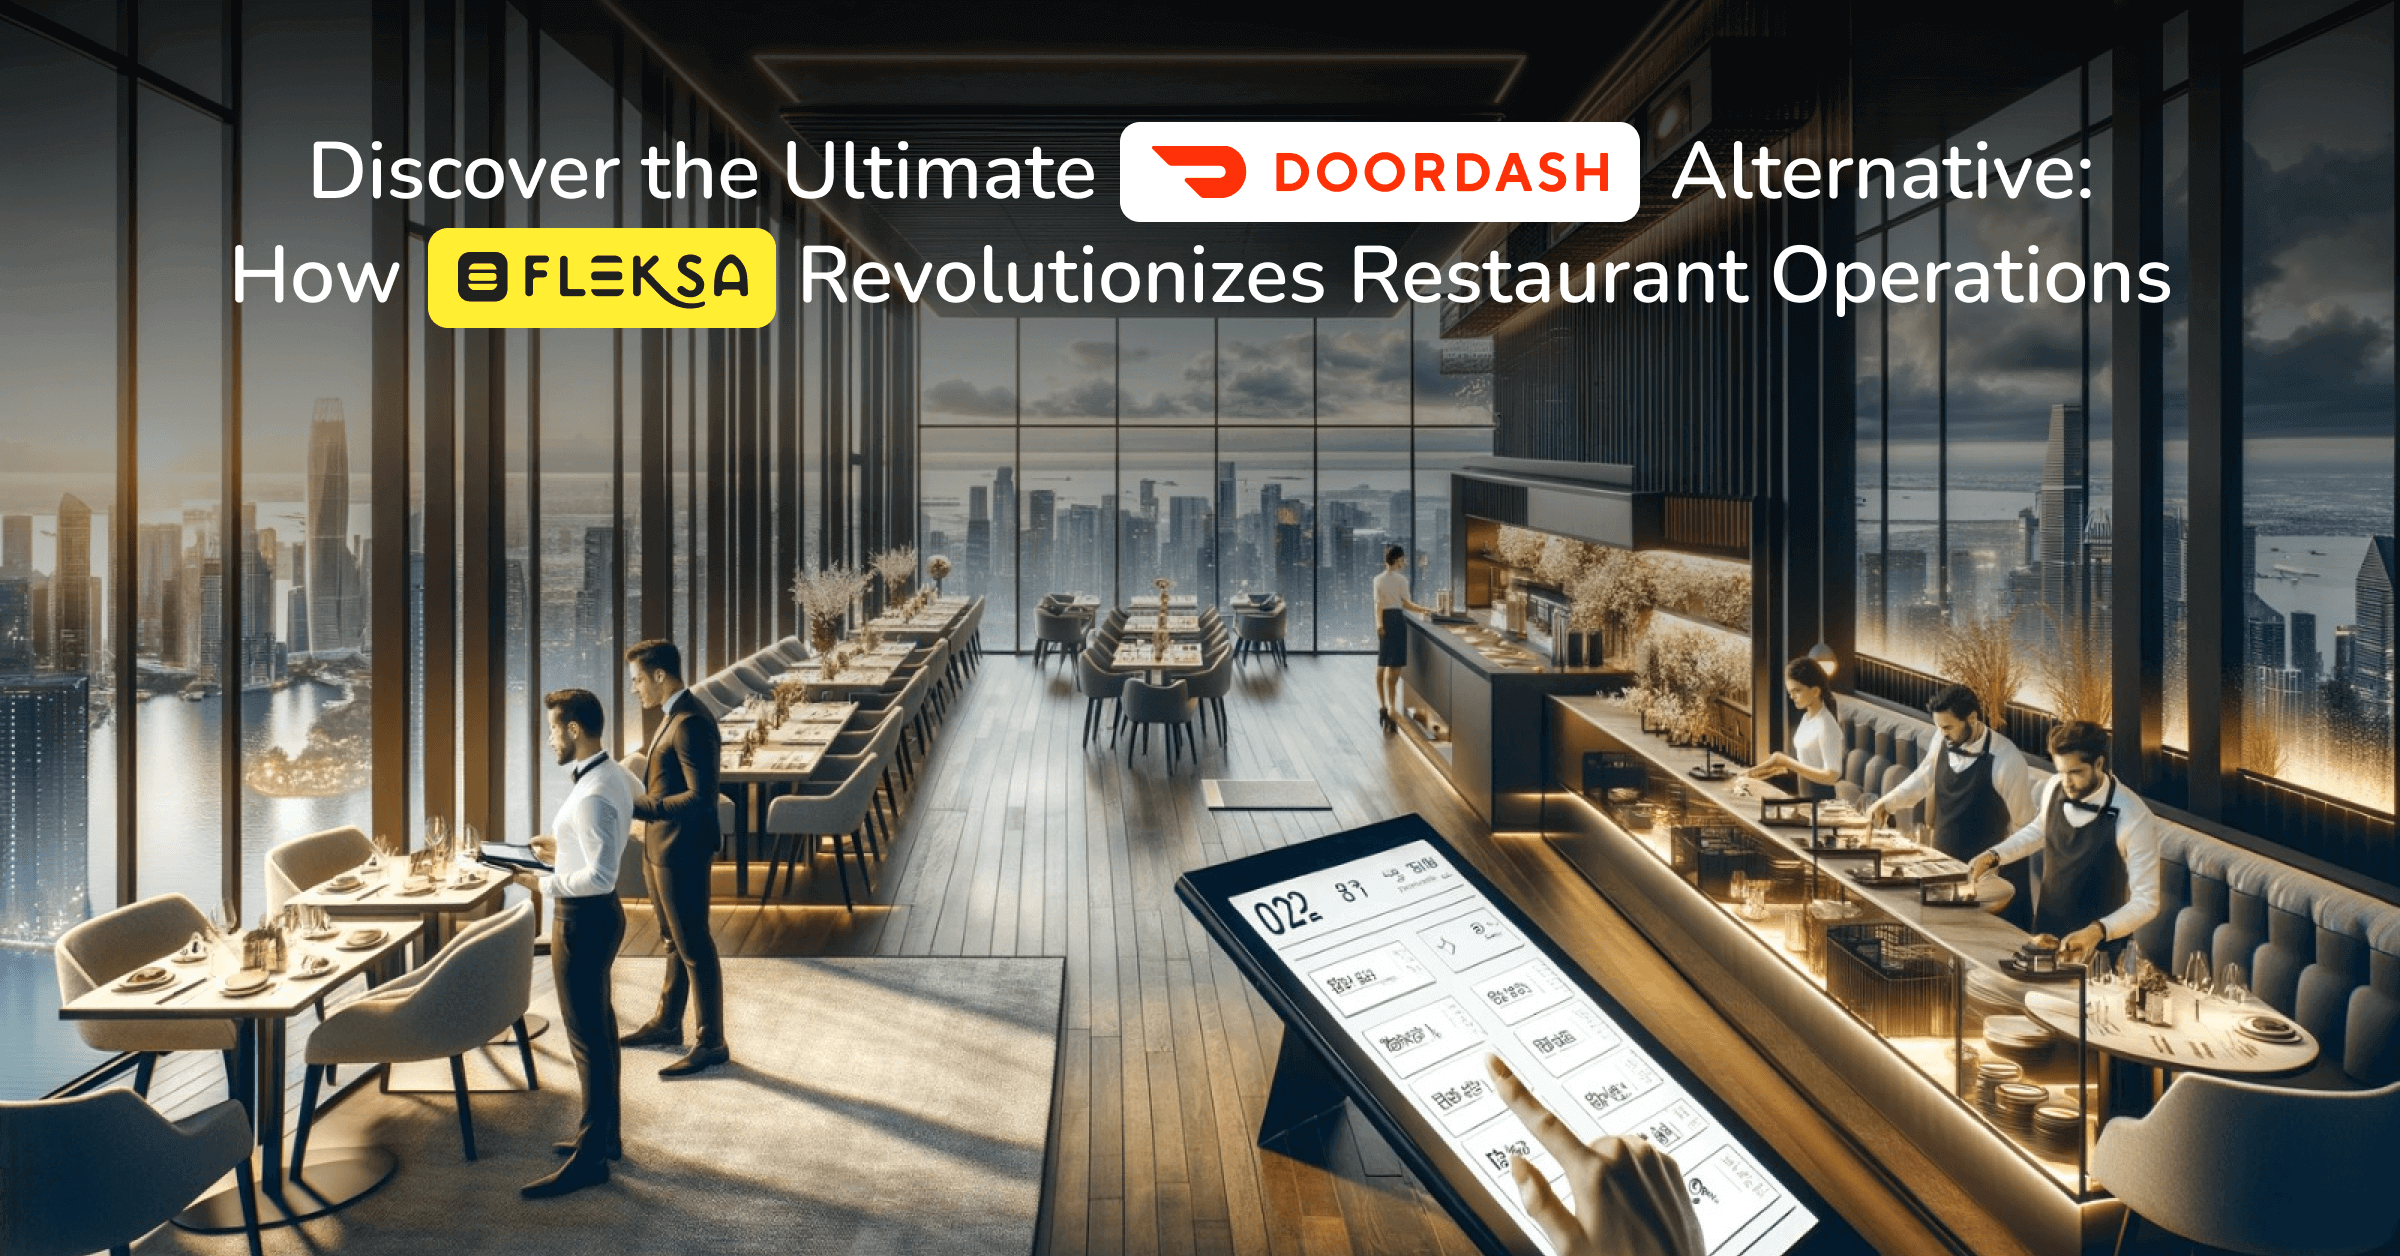 Discover The Ultimate Doordash Alternative: How Fleksa Revolutionizes Restaurant Operations